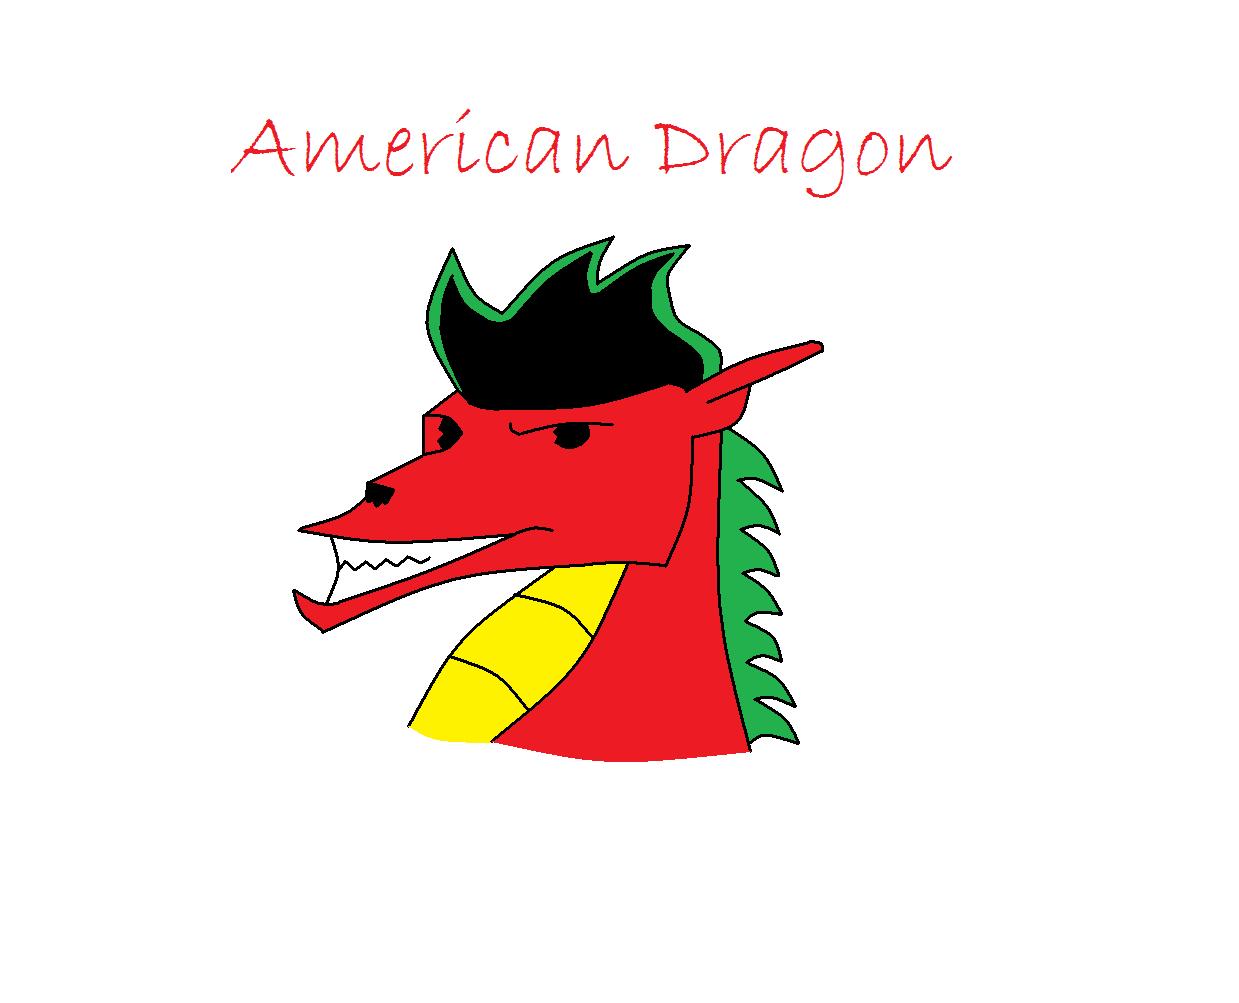 The American Dragon by priderocklover